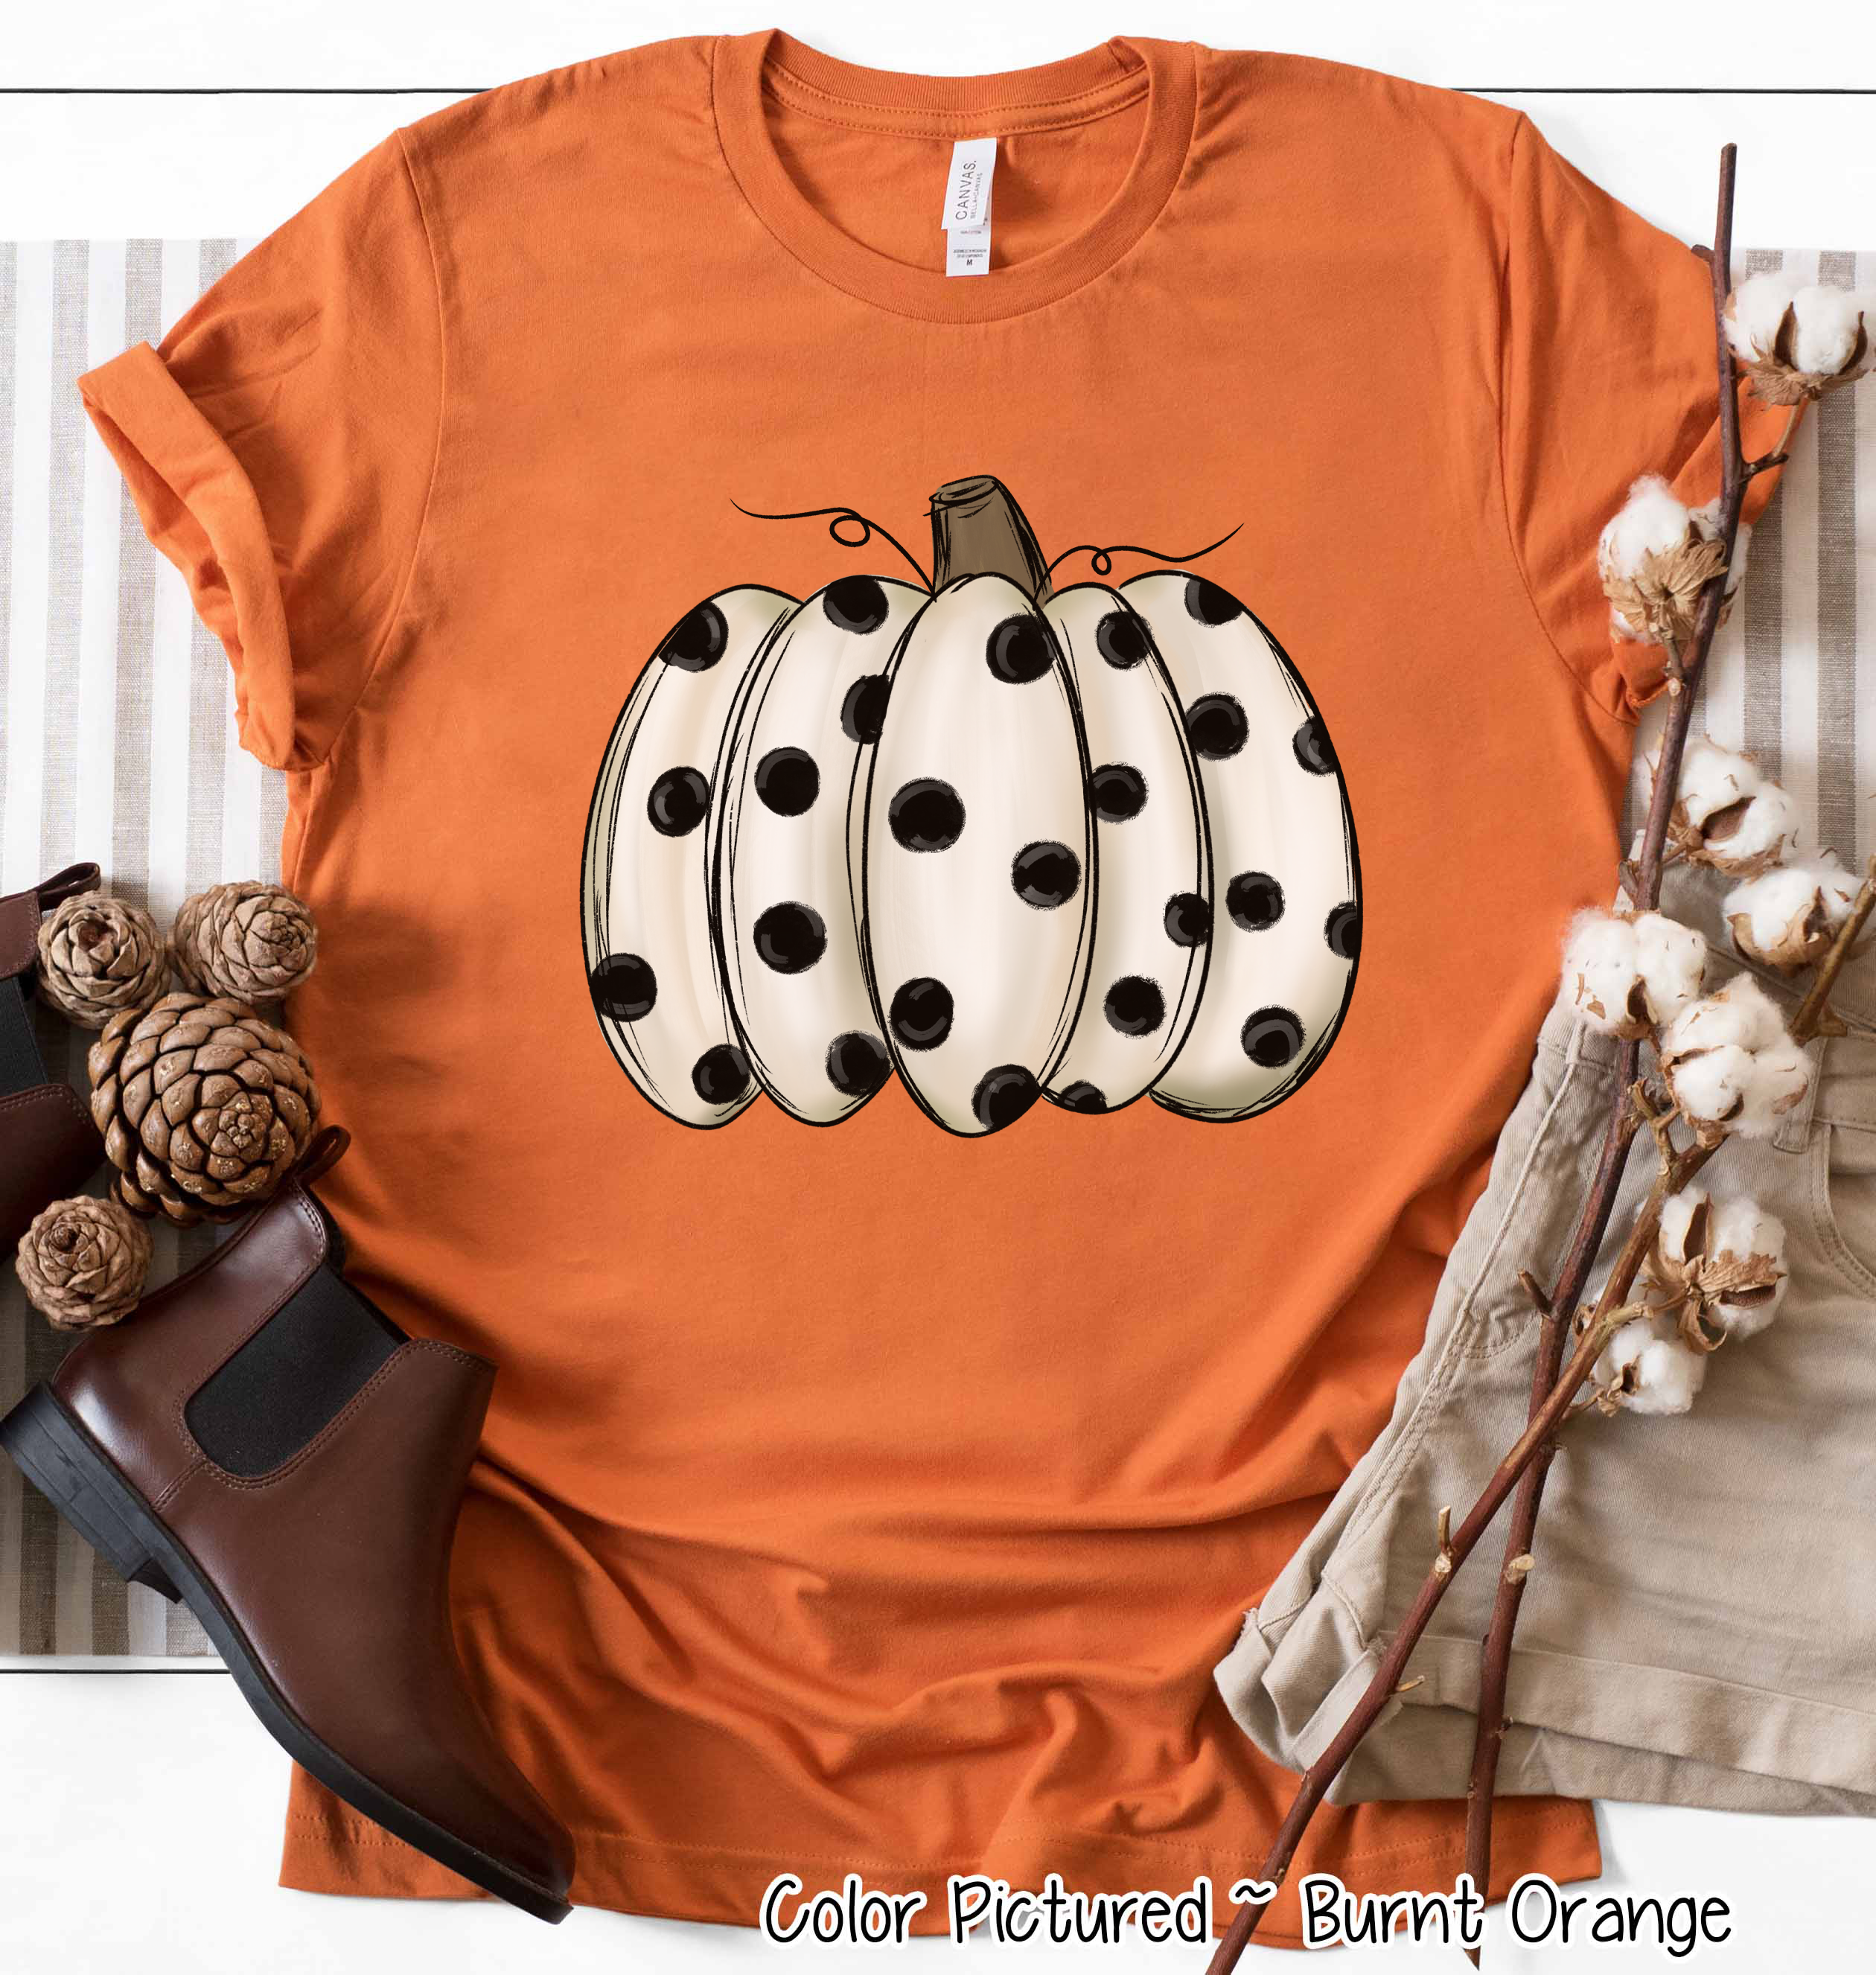 White Polka Dot Pumpkin Shirt